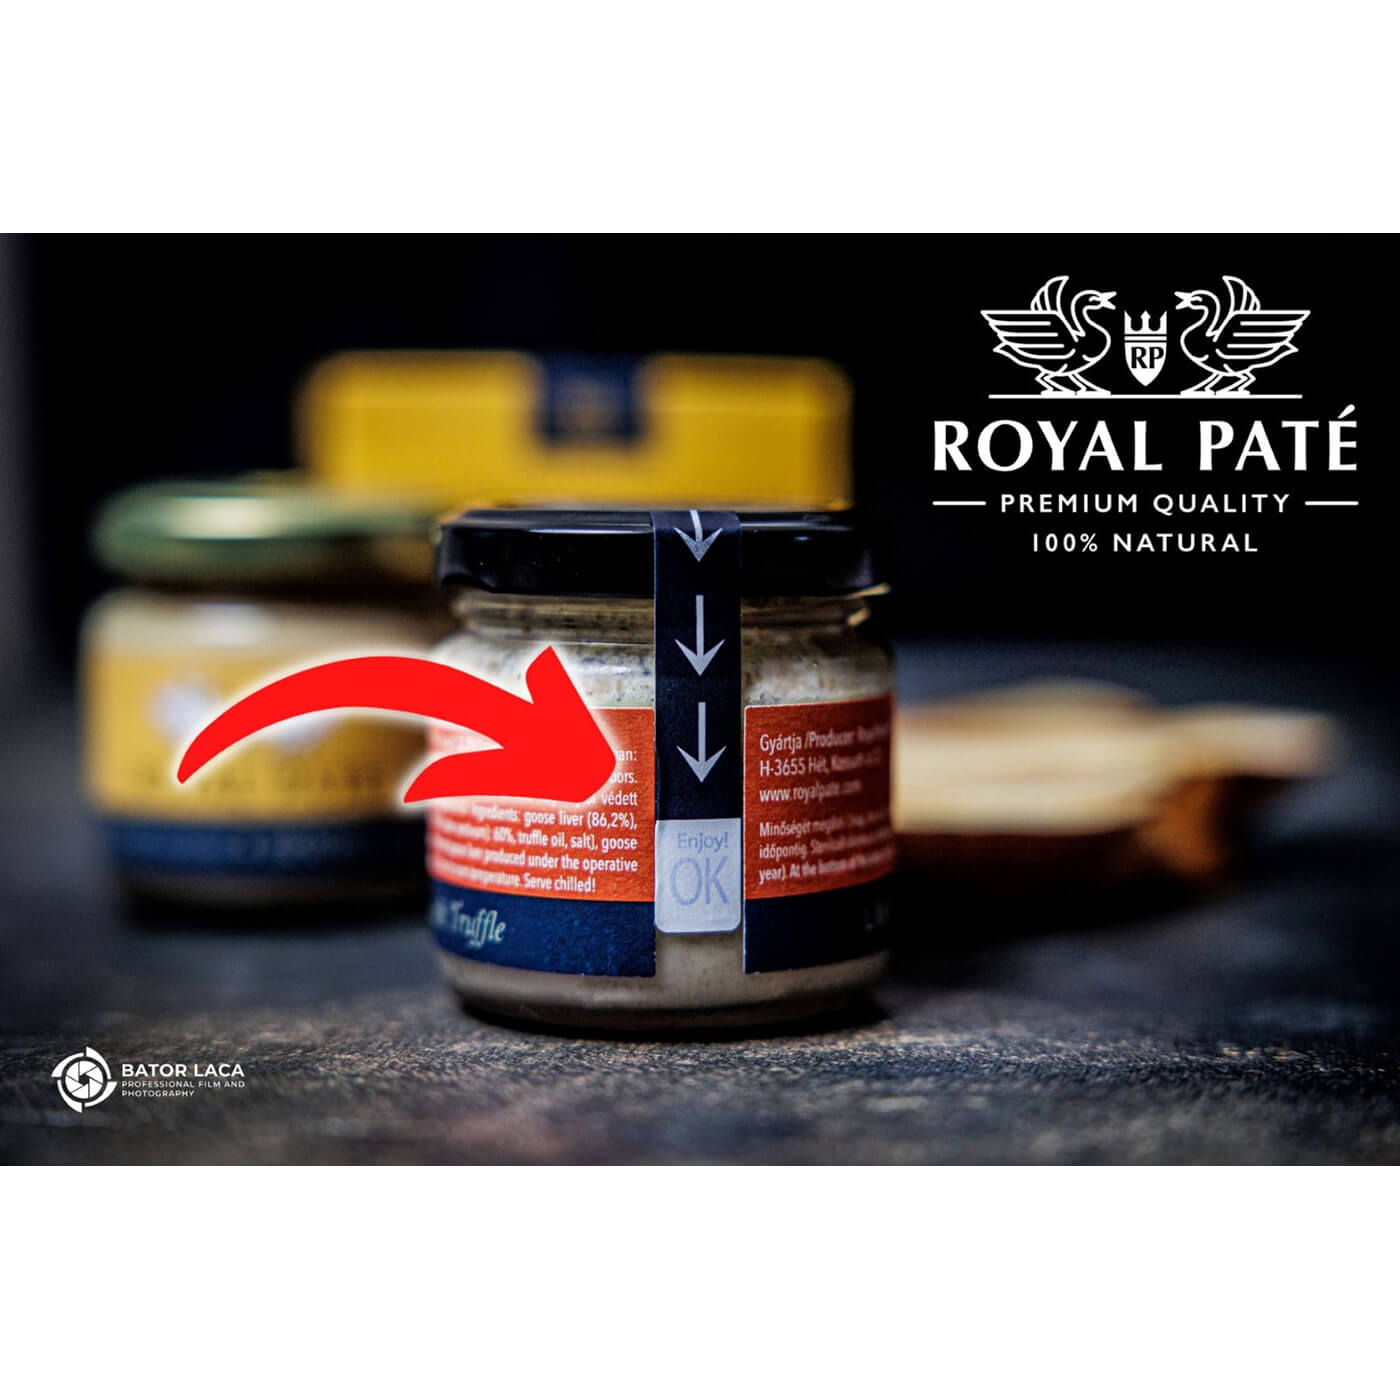 Bloc de foie gras cu trufe negre 86% Royal Pate 70g